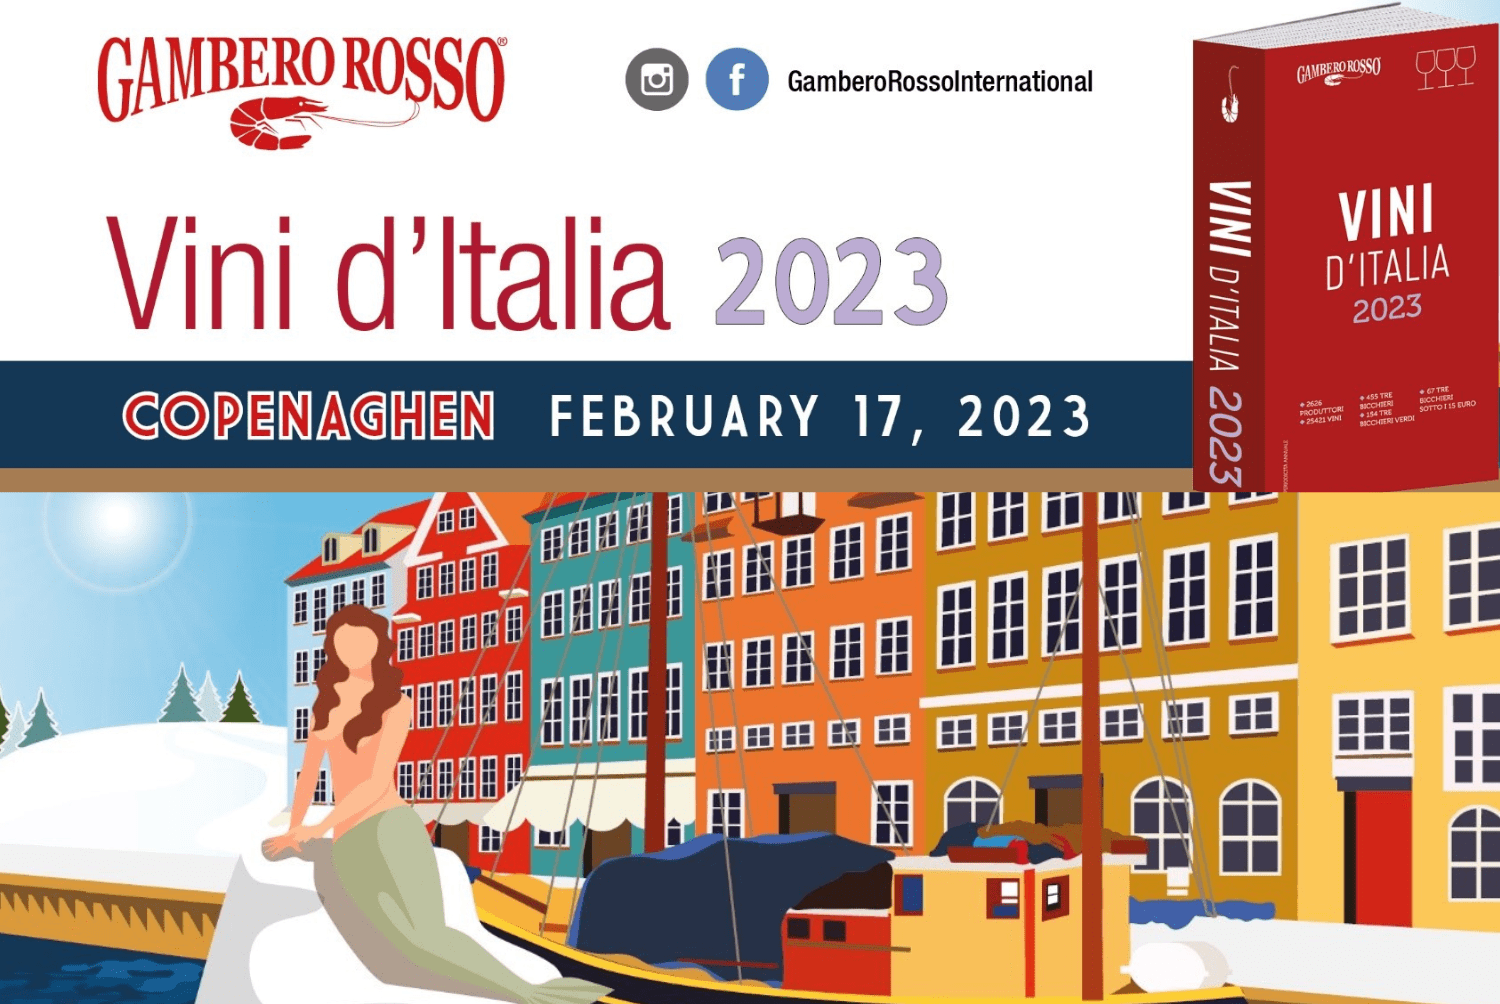 Vini d’Italia 2023 Gambero Rosso Copenaghen